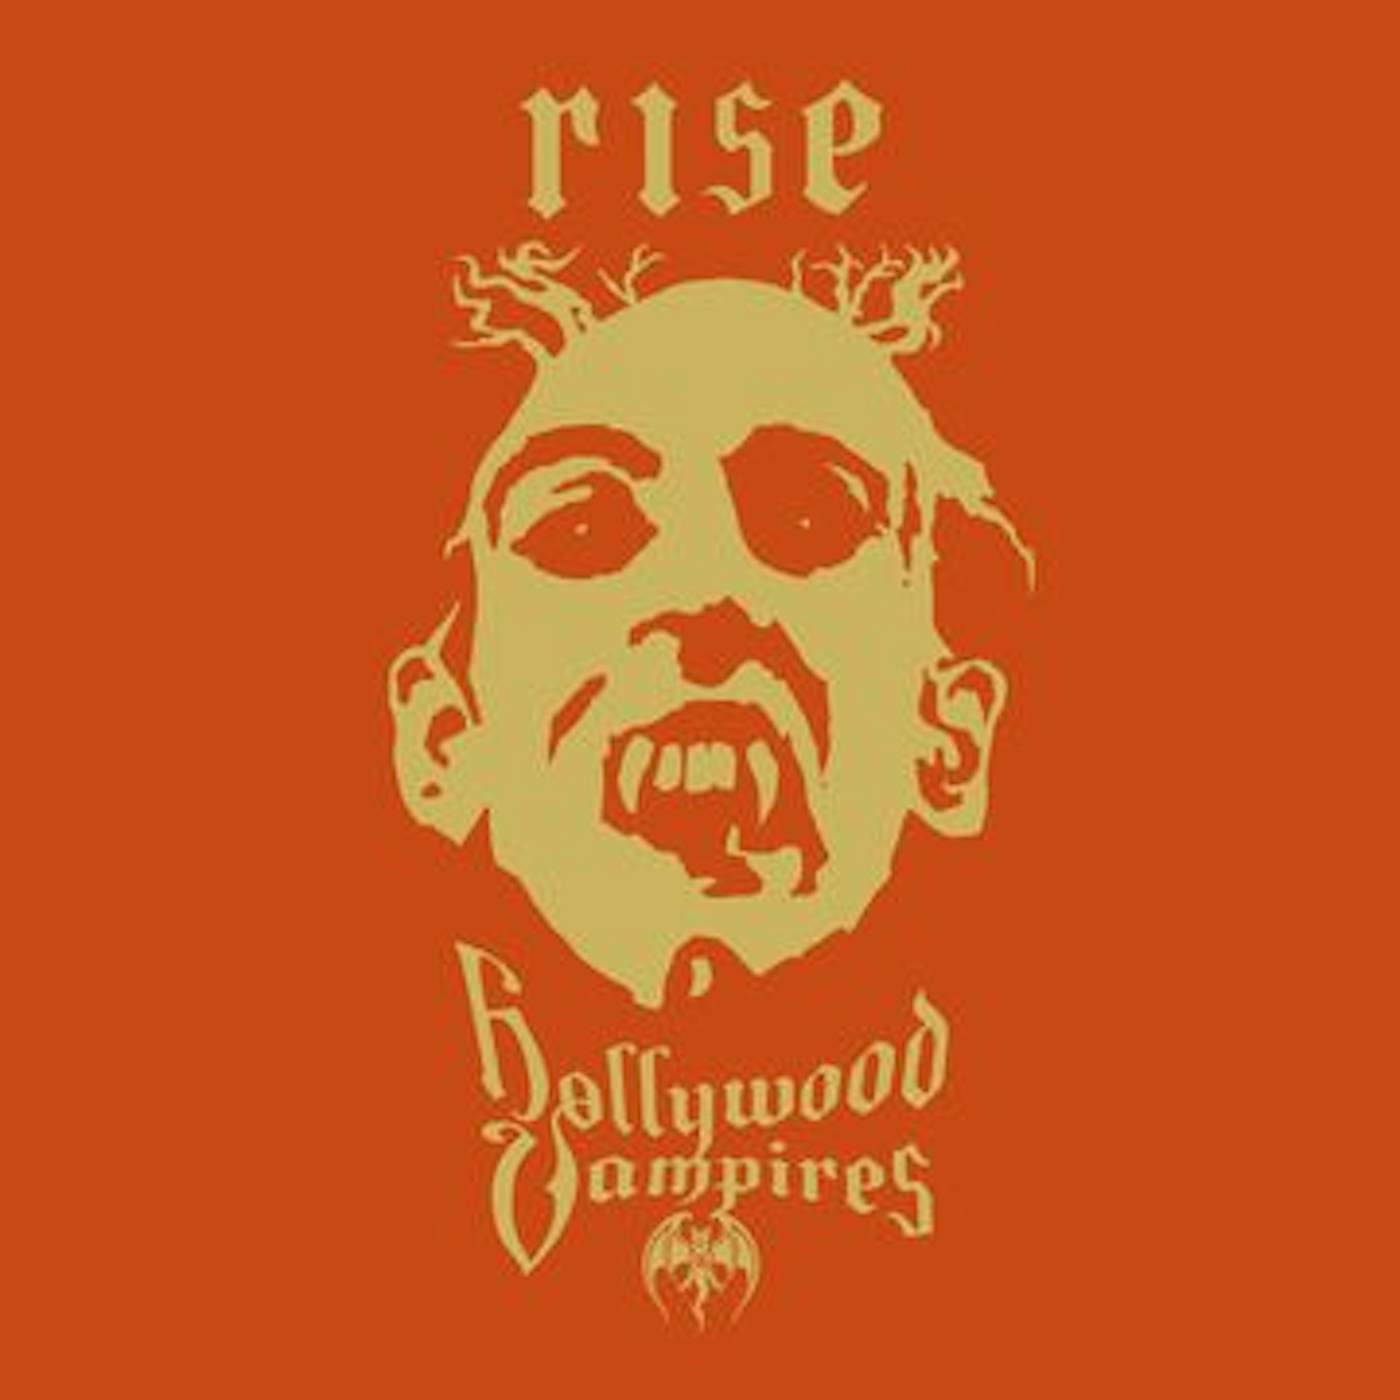 Hollywood Vampires RISE (DIGIPACK WITH FOIL EMBOSS) CD